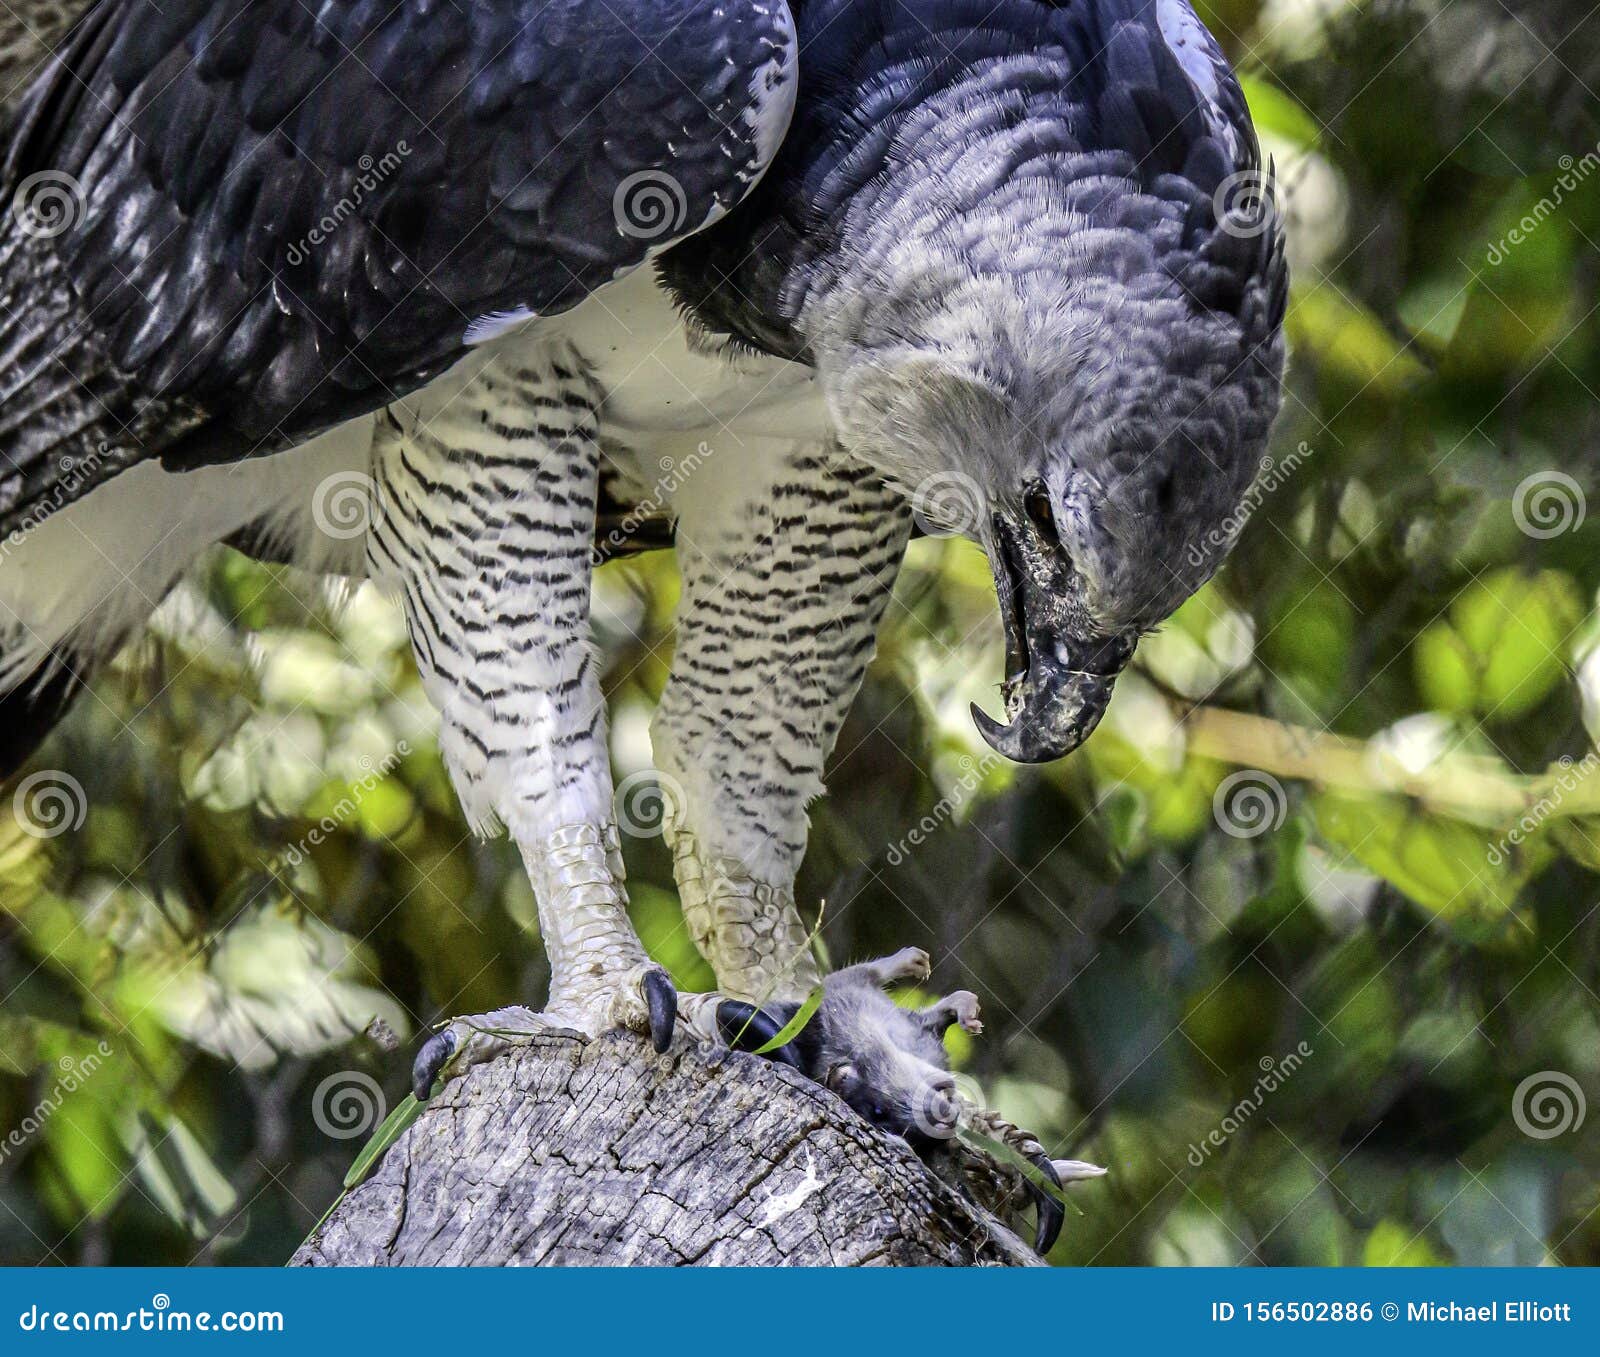 https://thumbs.dreamstime.com/z/close-up-portrait-predatory-neotropical-eagle-south-central-america-harpy-eagle-raptor-feeding-156502886.jpg